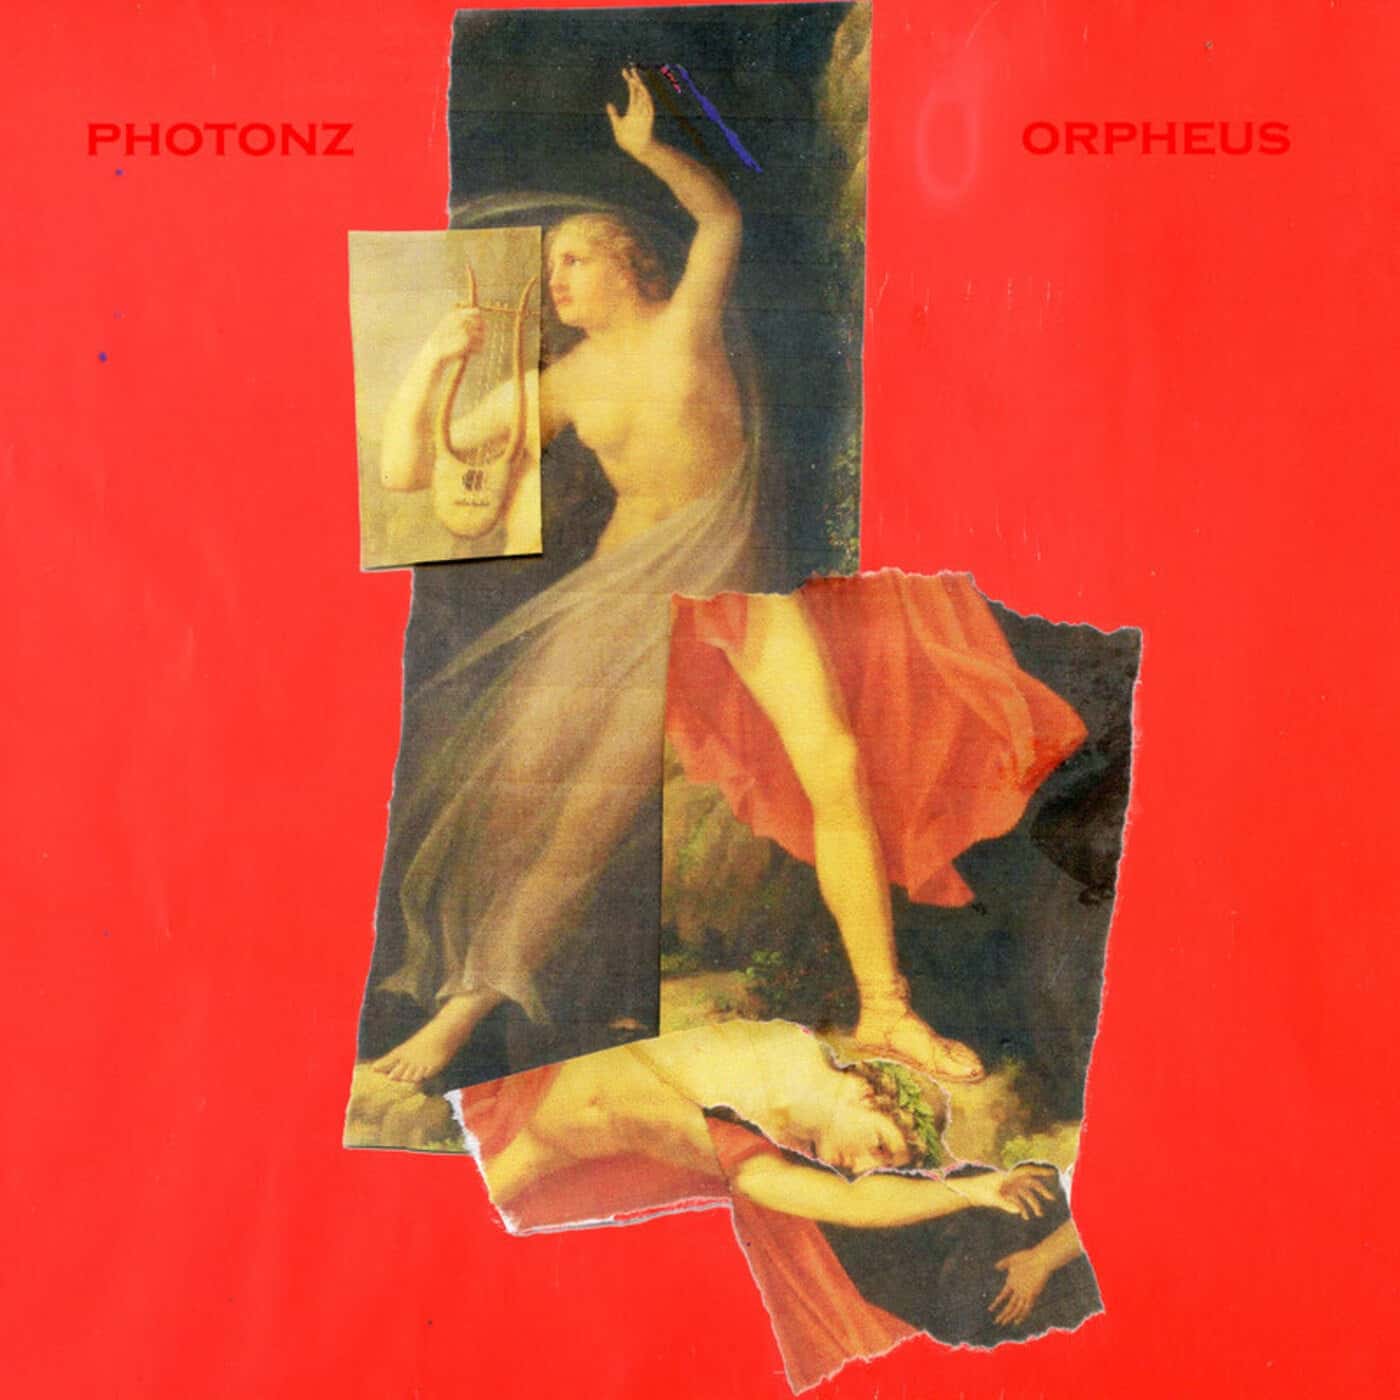 Download Photonz - Orpheus on Electrobuzz